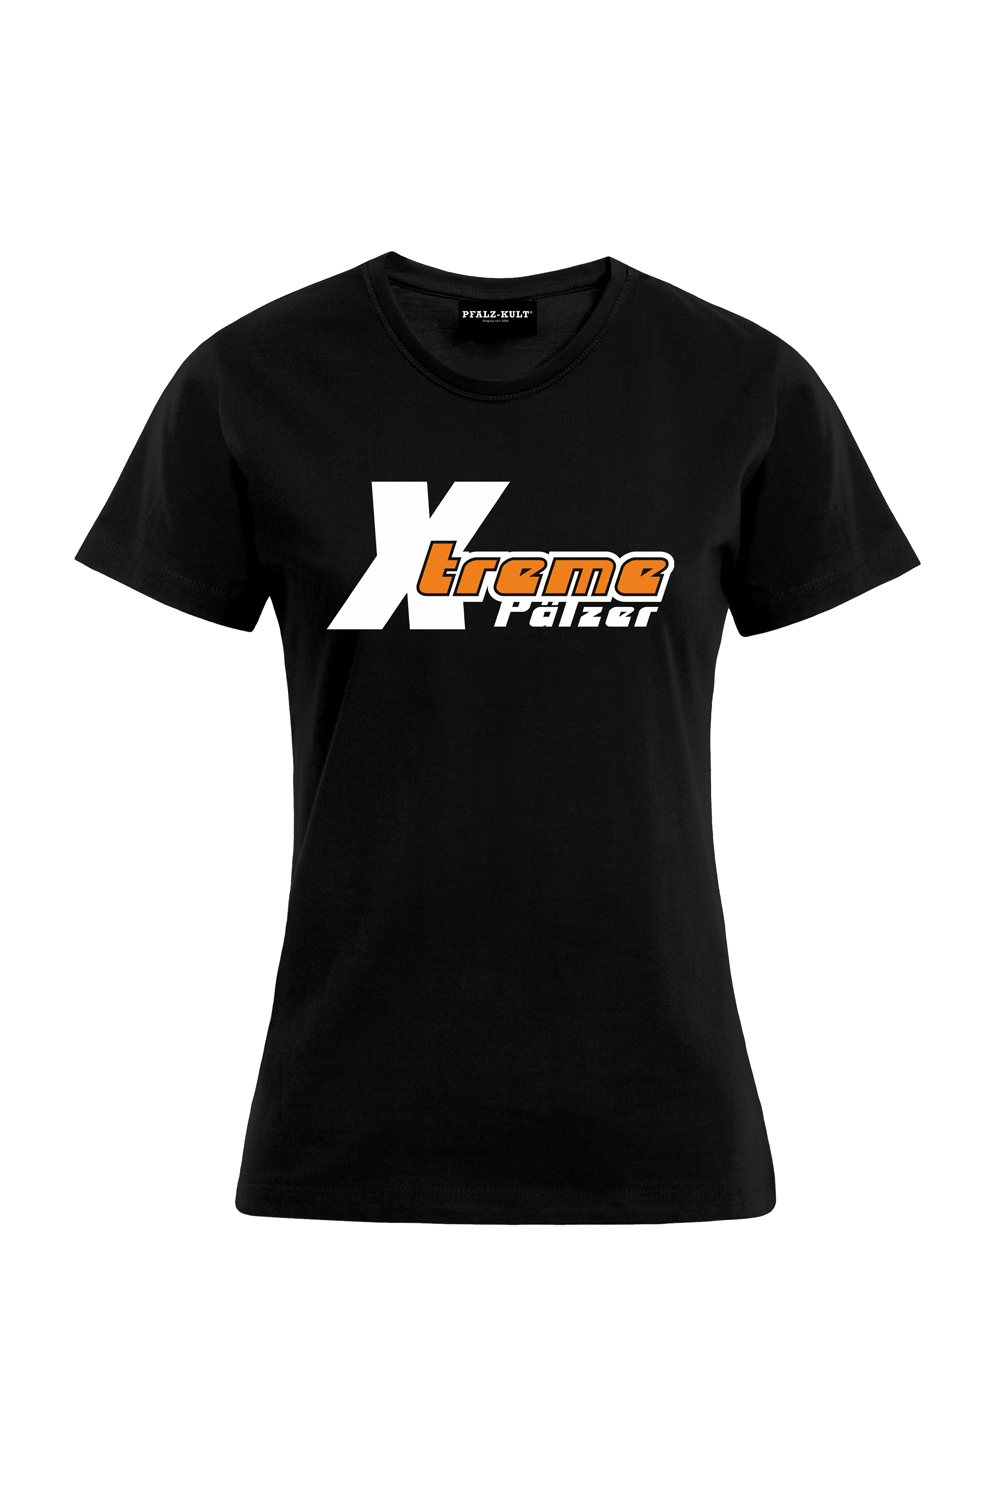 Xtreme Pälzer - Frauen T-Shirt